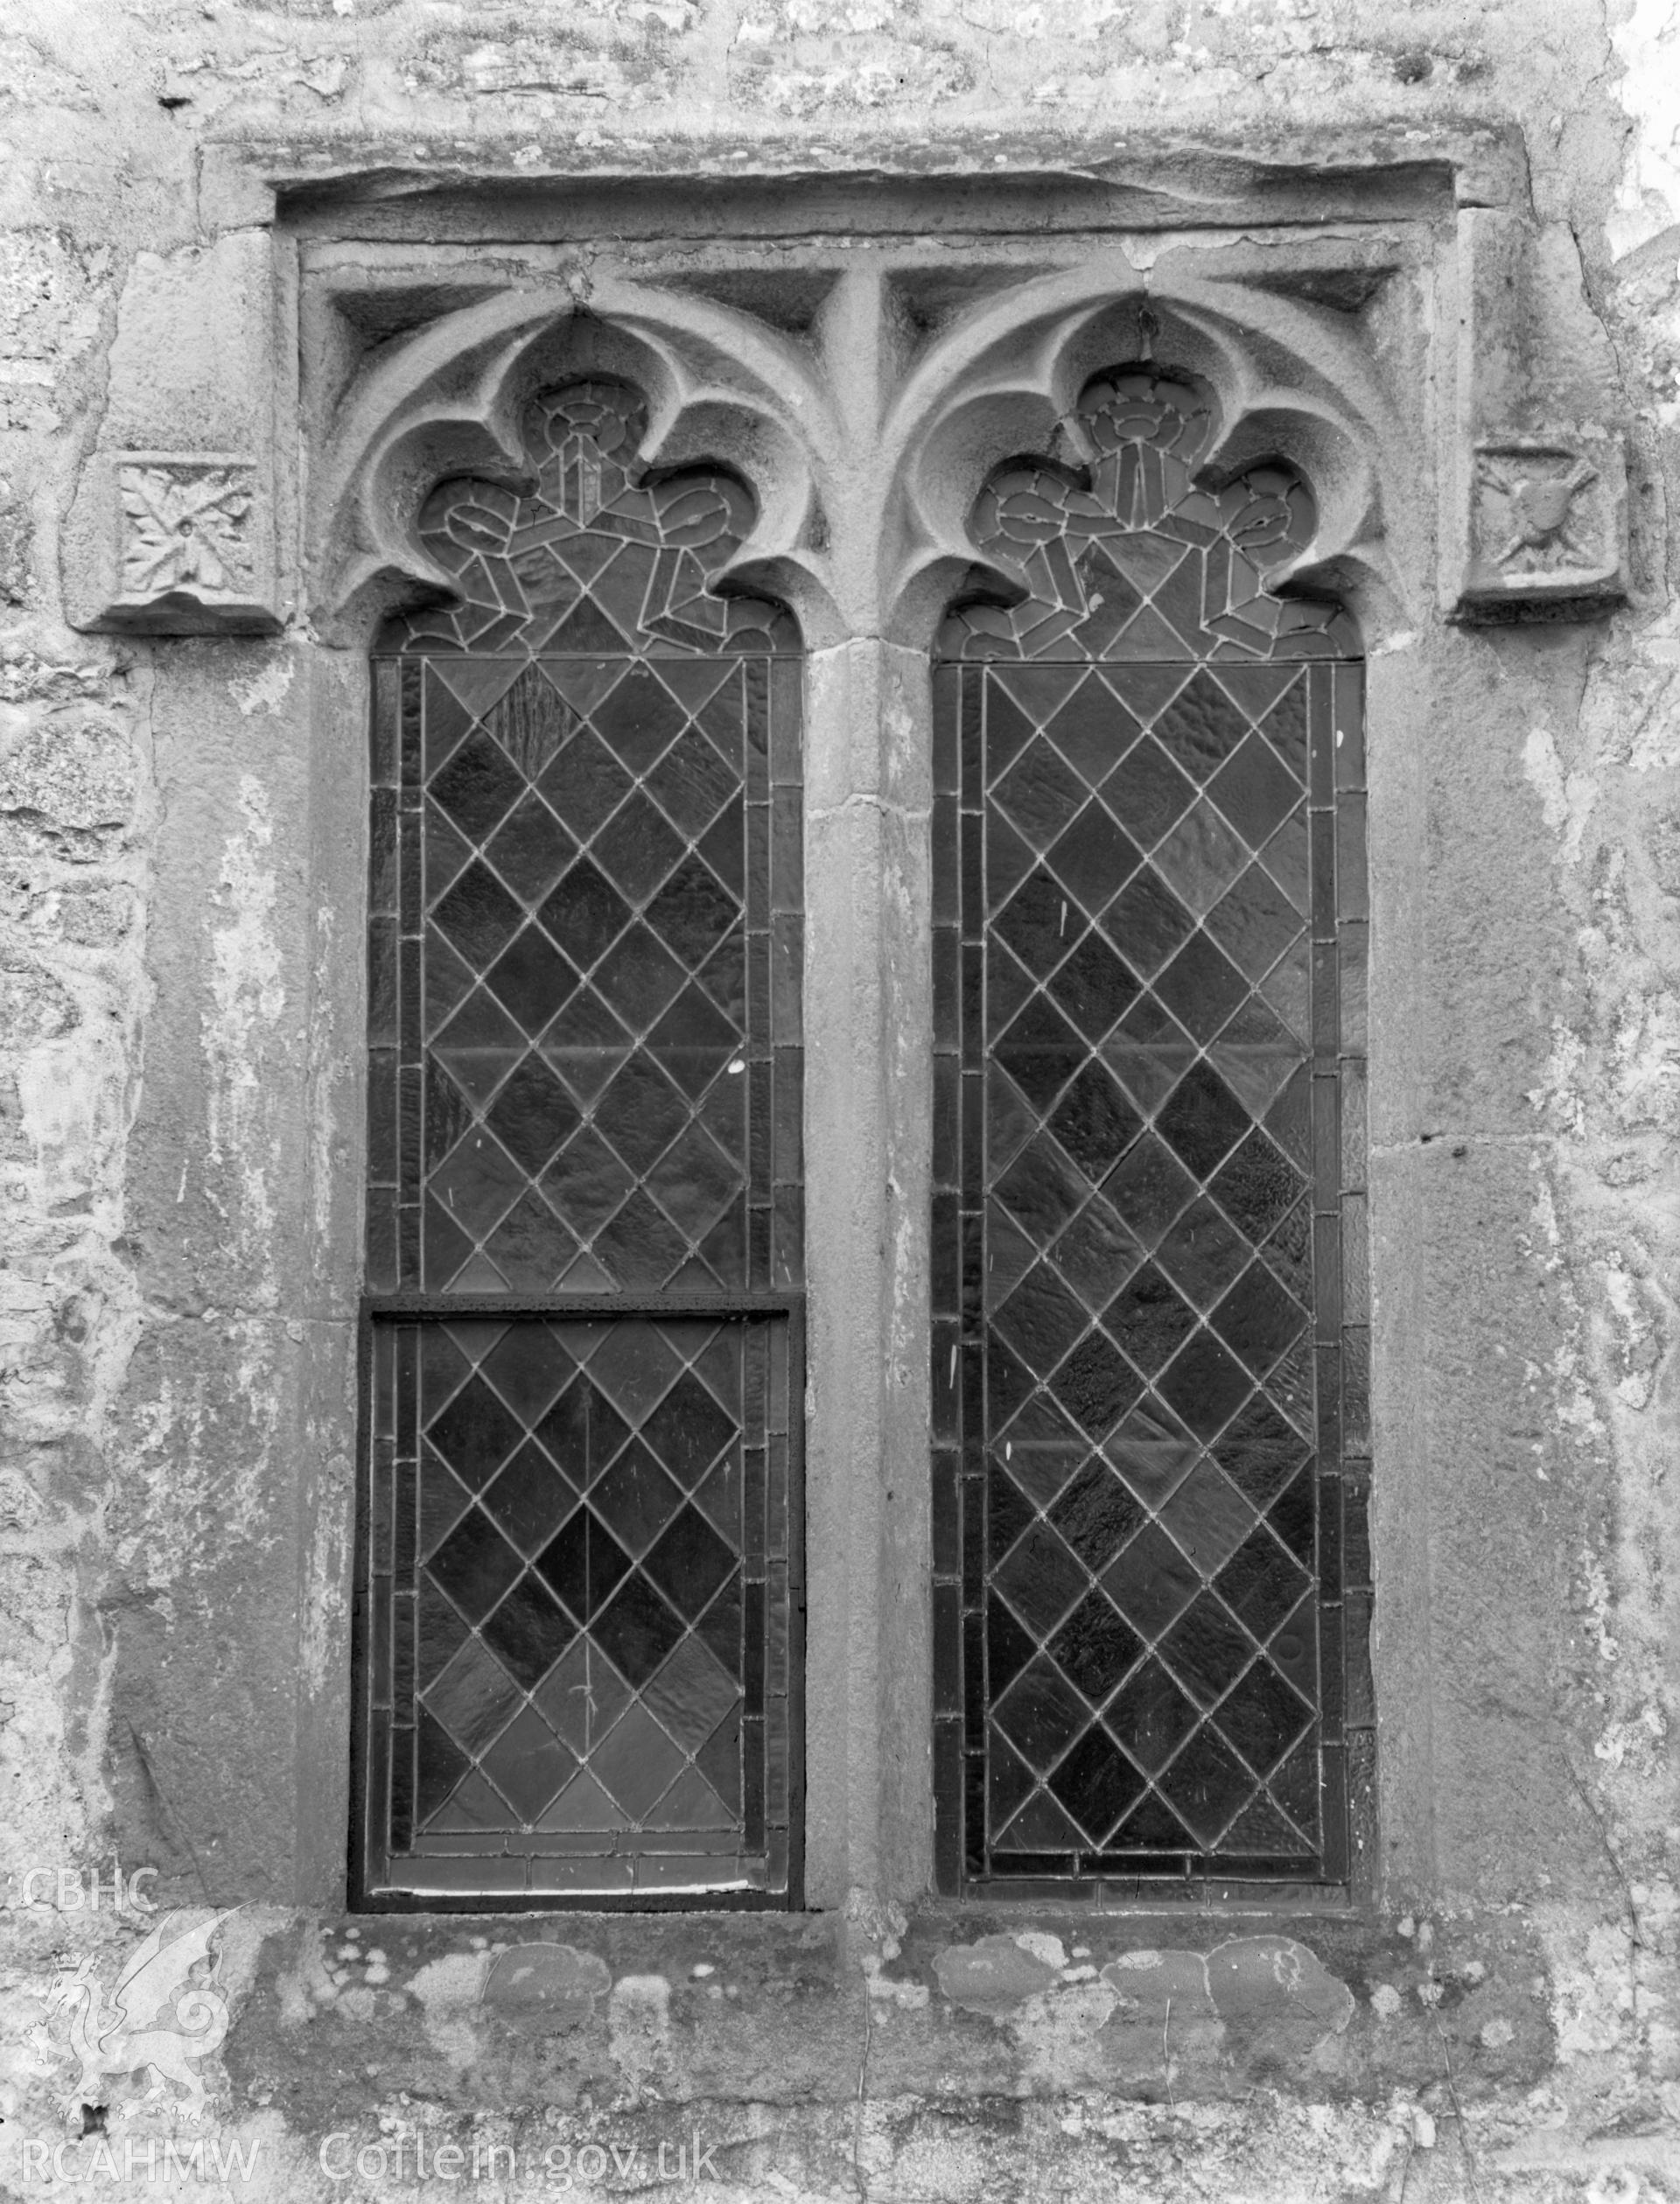 View of window at St Michael's Church, Llanmihangel taken 07.04.65.